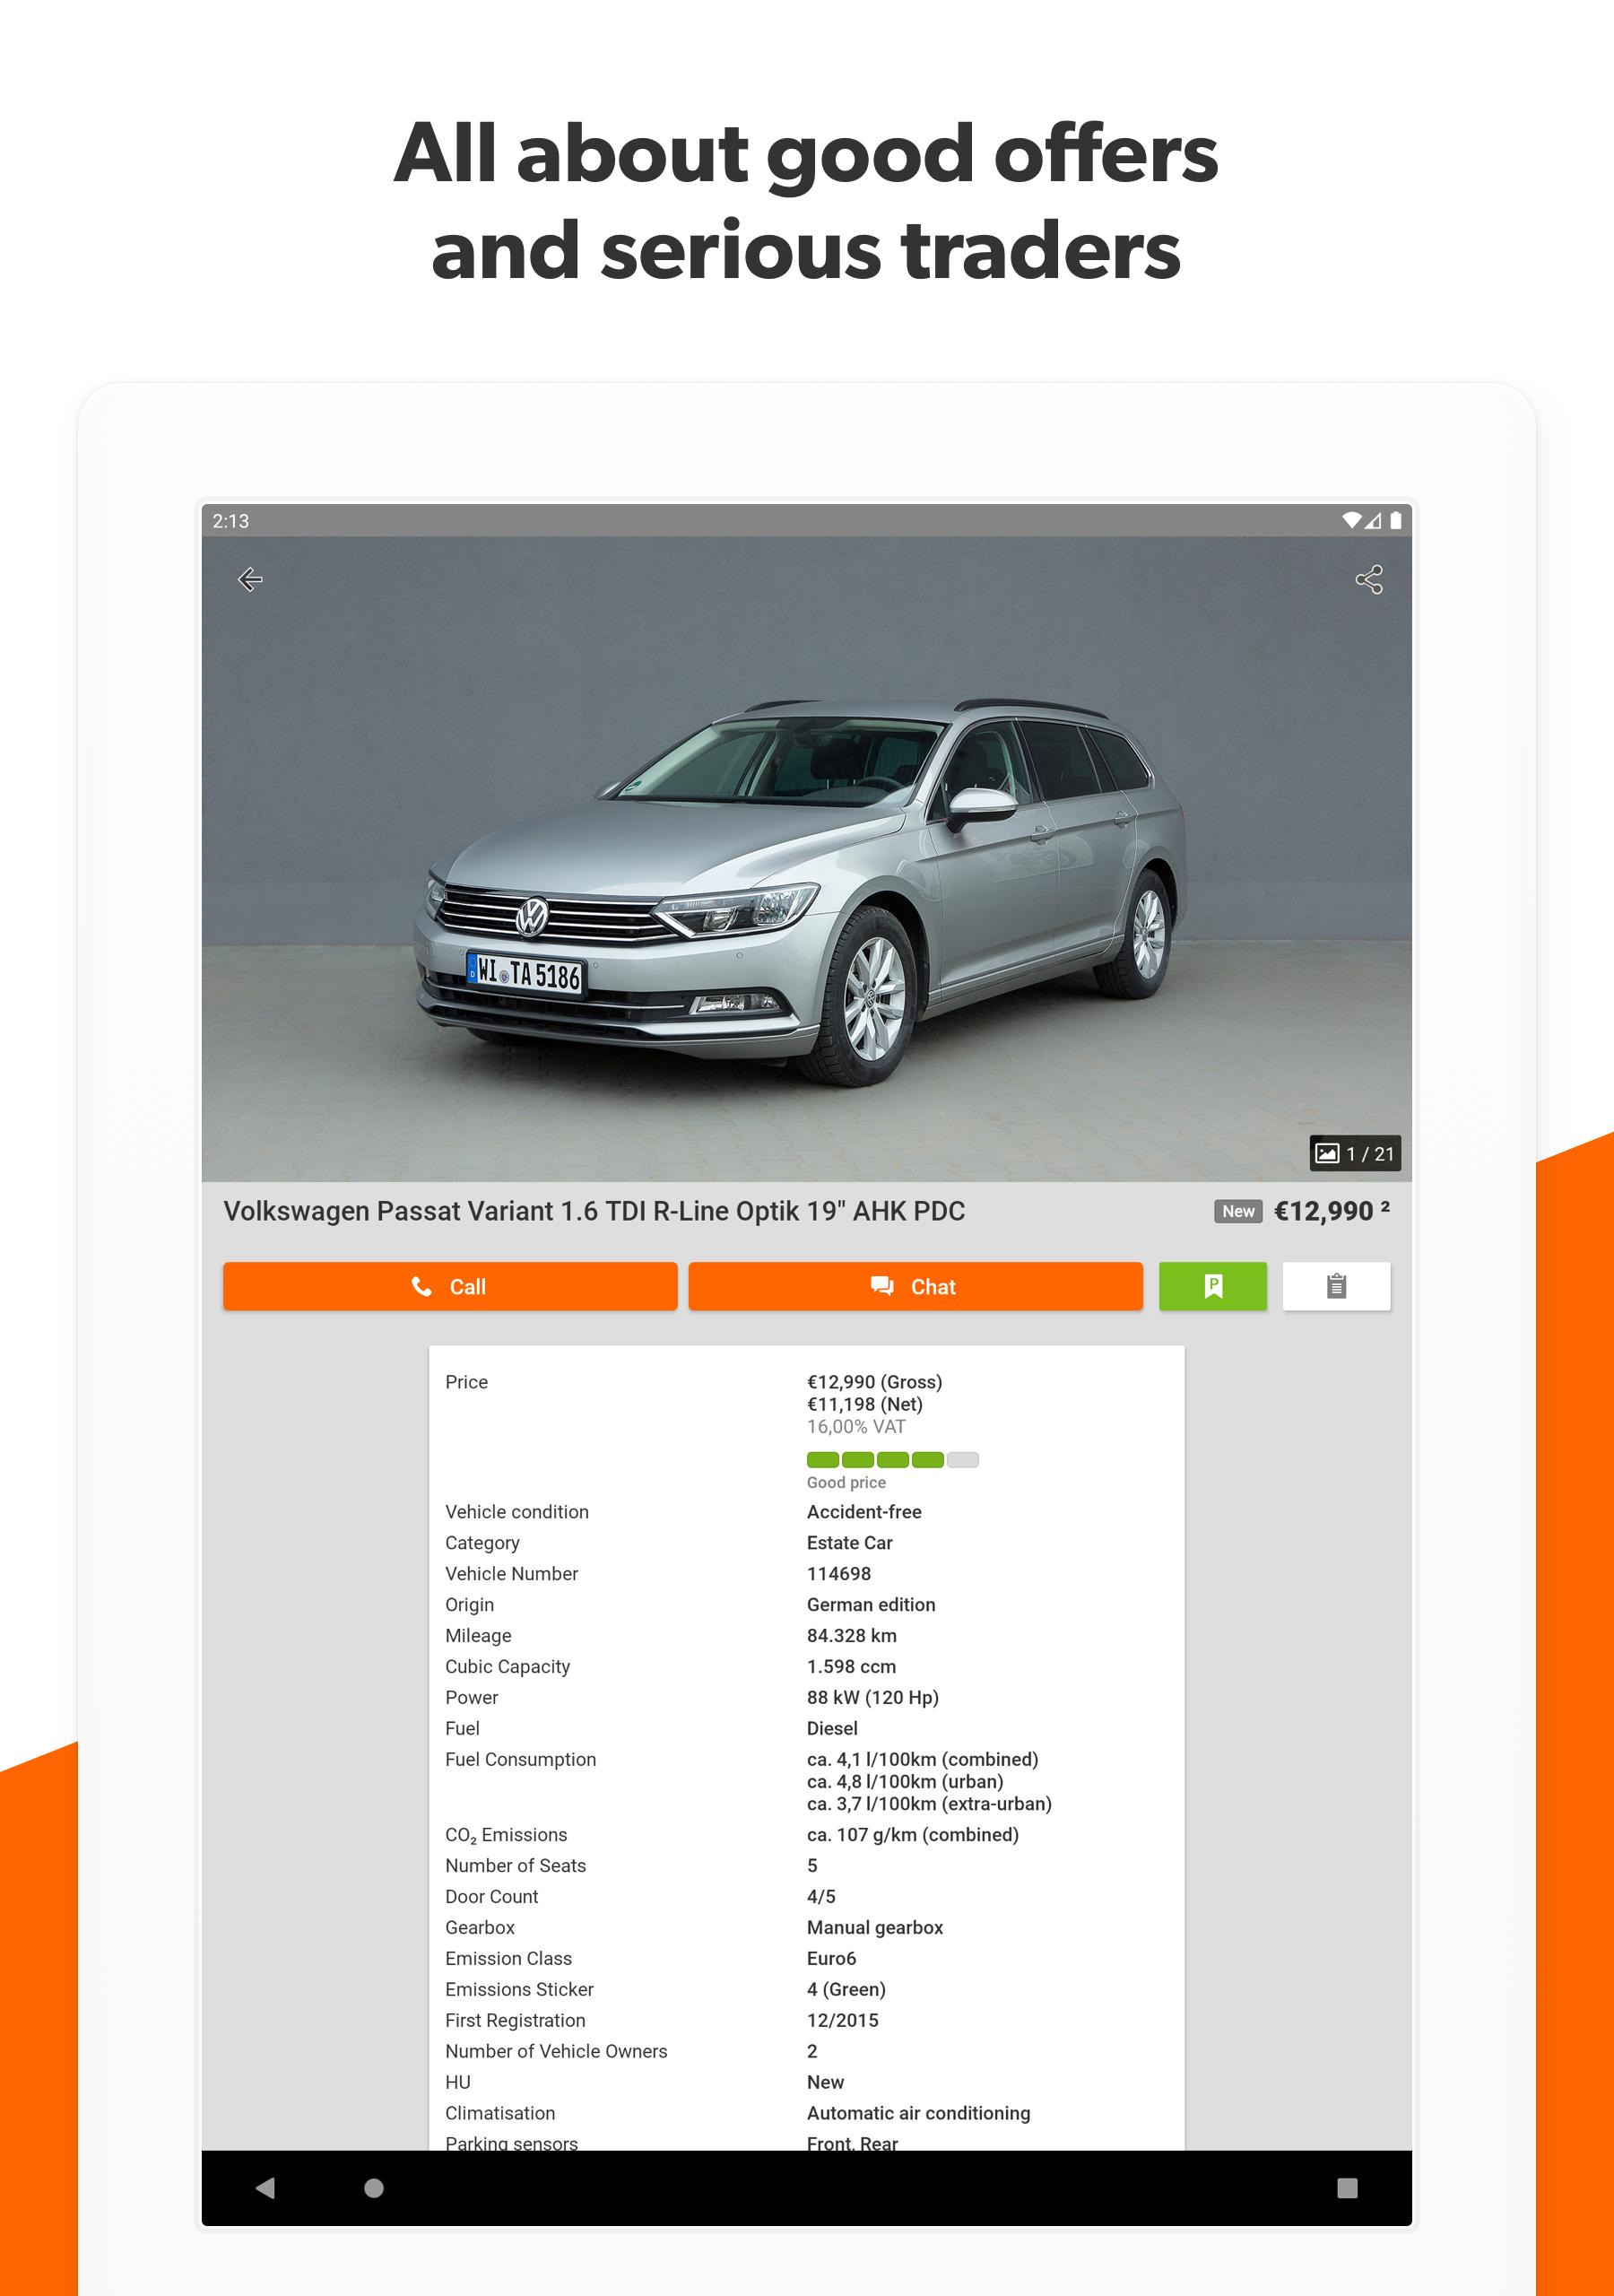 mobile.de – Germany‘s largest car market 8.15.2 Screenshot 11